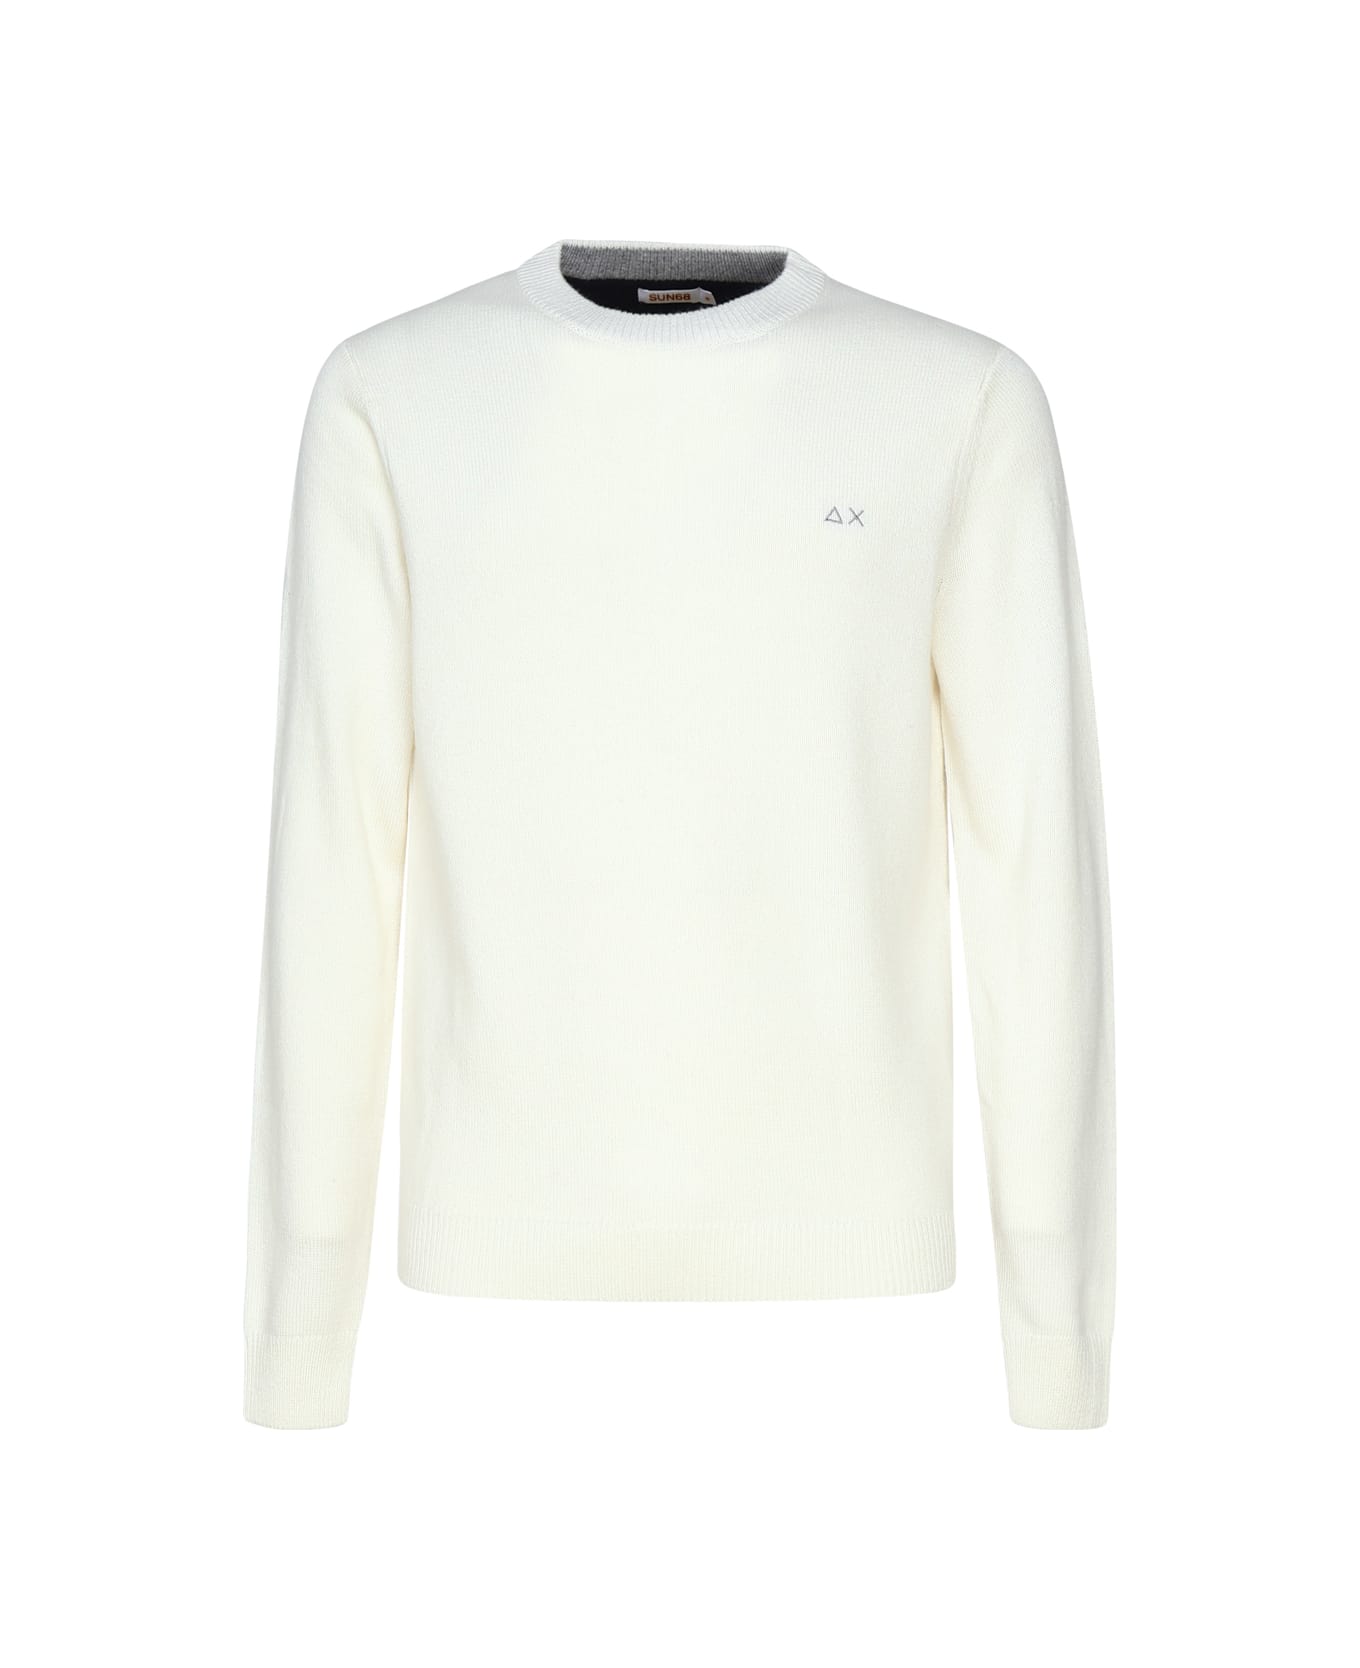 Sun 68 Round Wool Blend Sweater - White ニットウェア